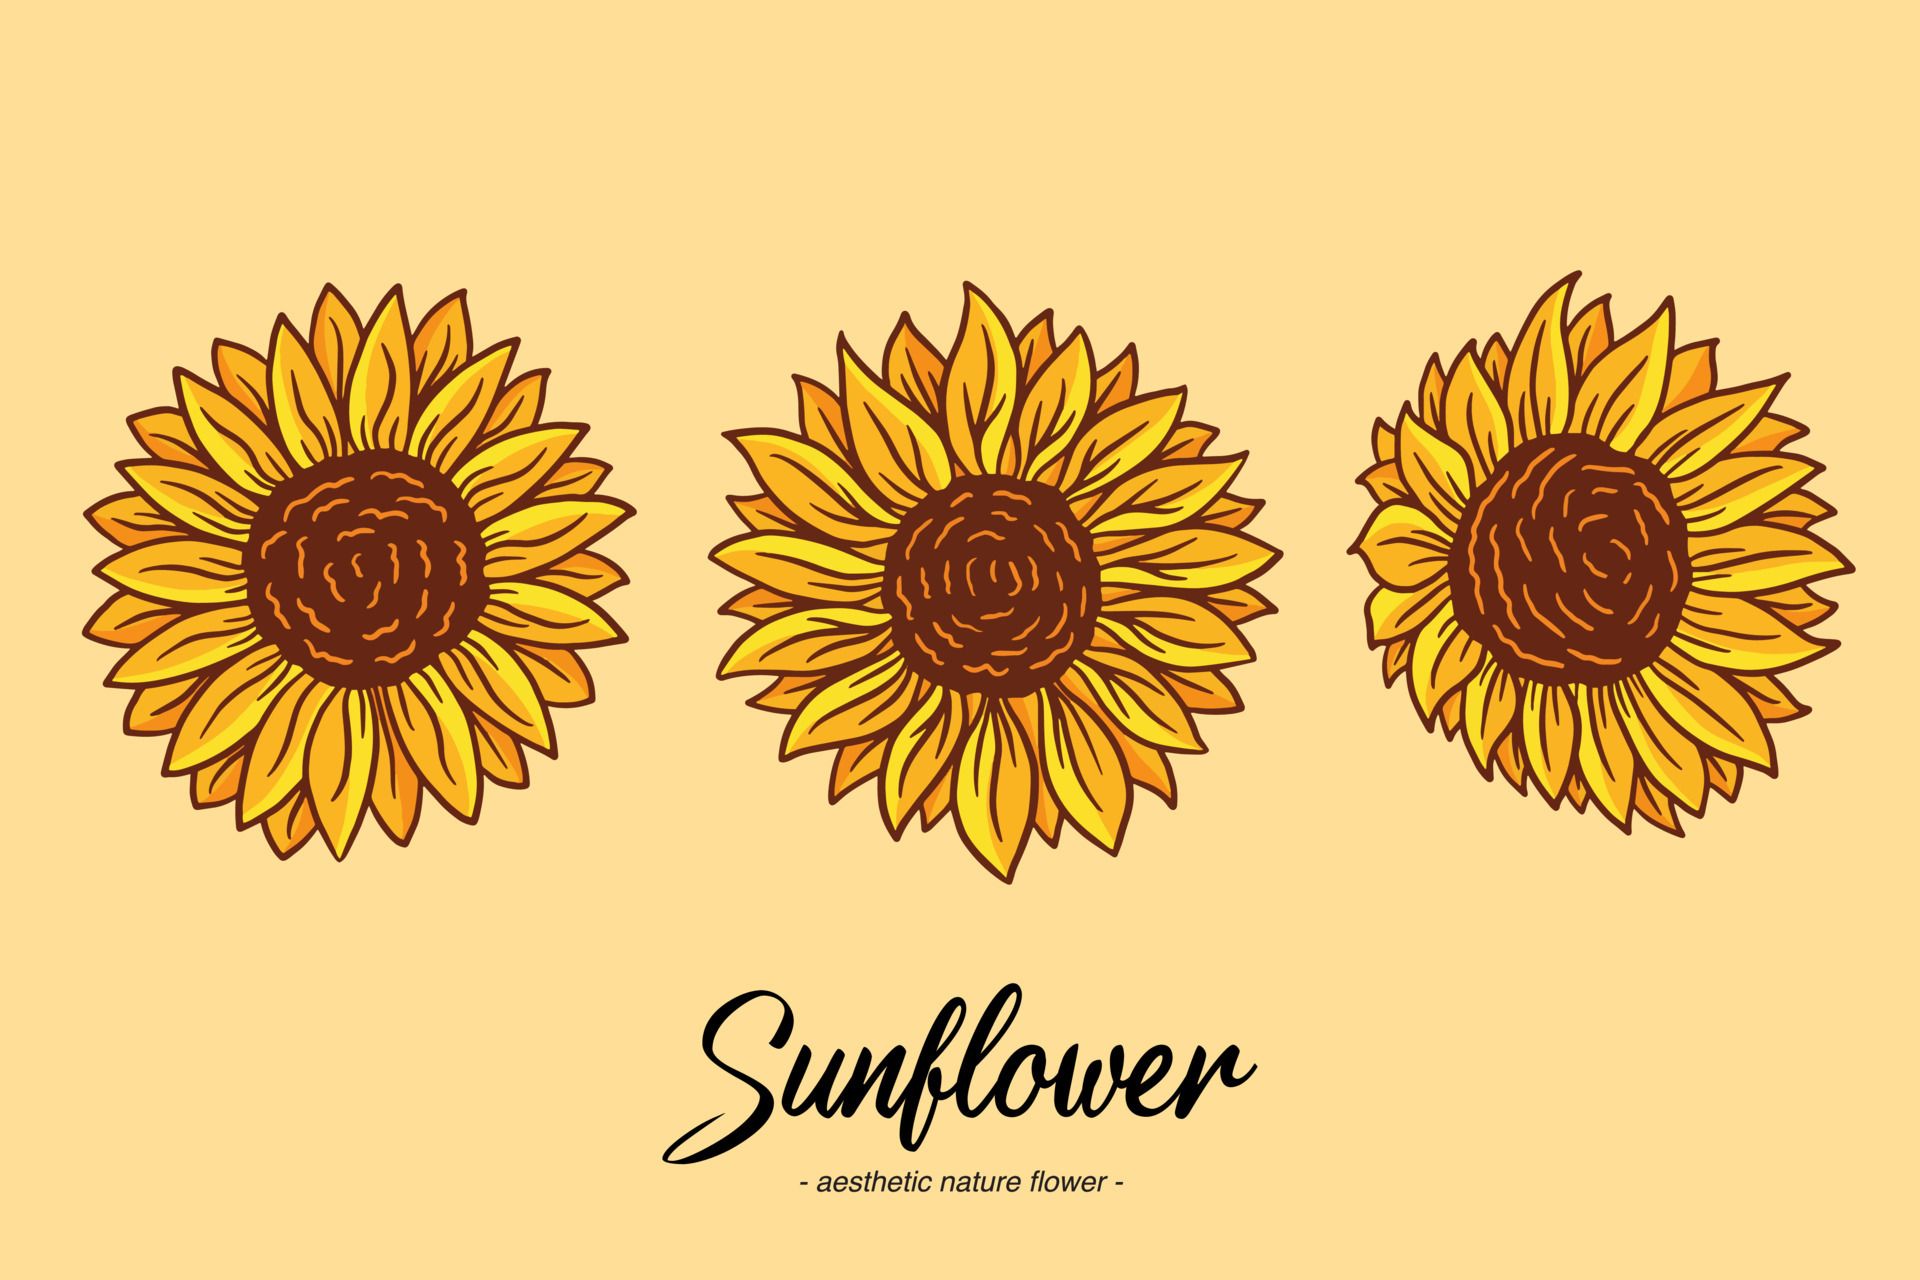 Three sunflowers on a yellow background - Sunflower